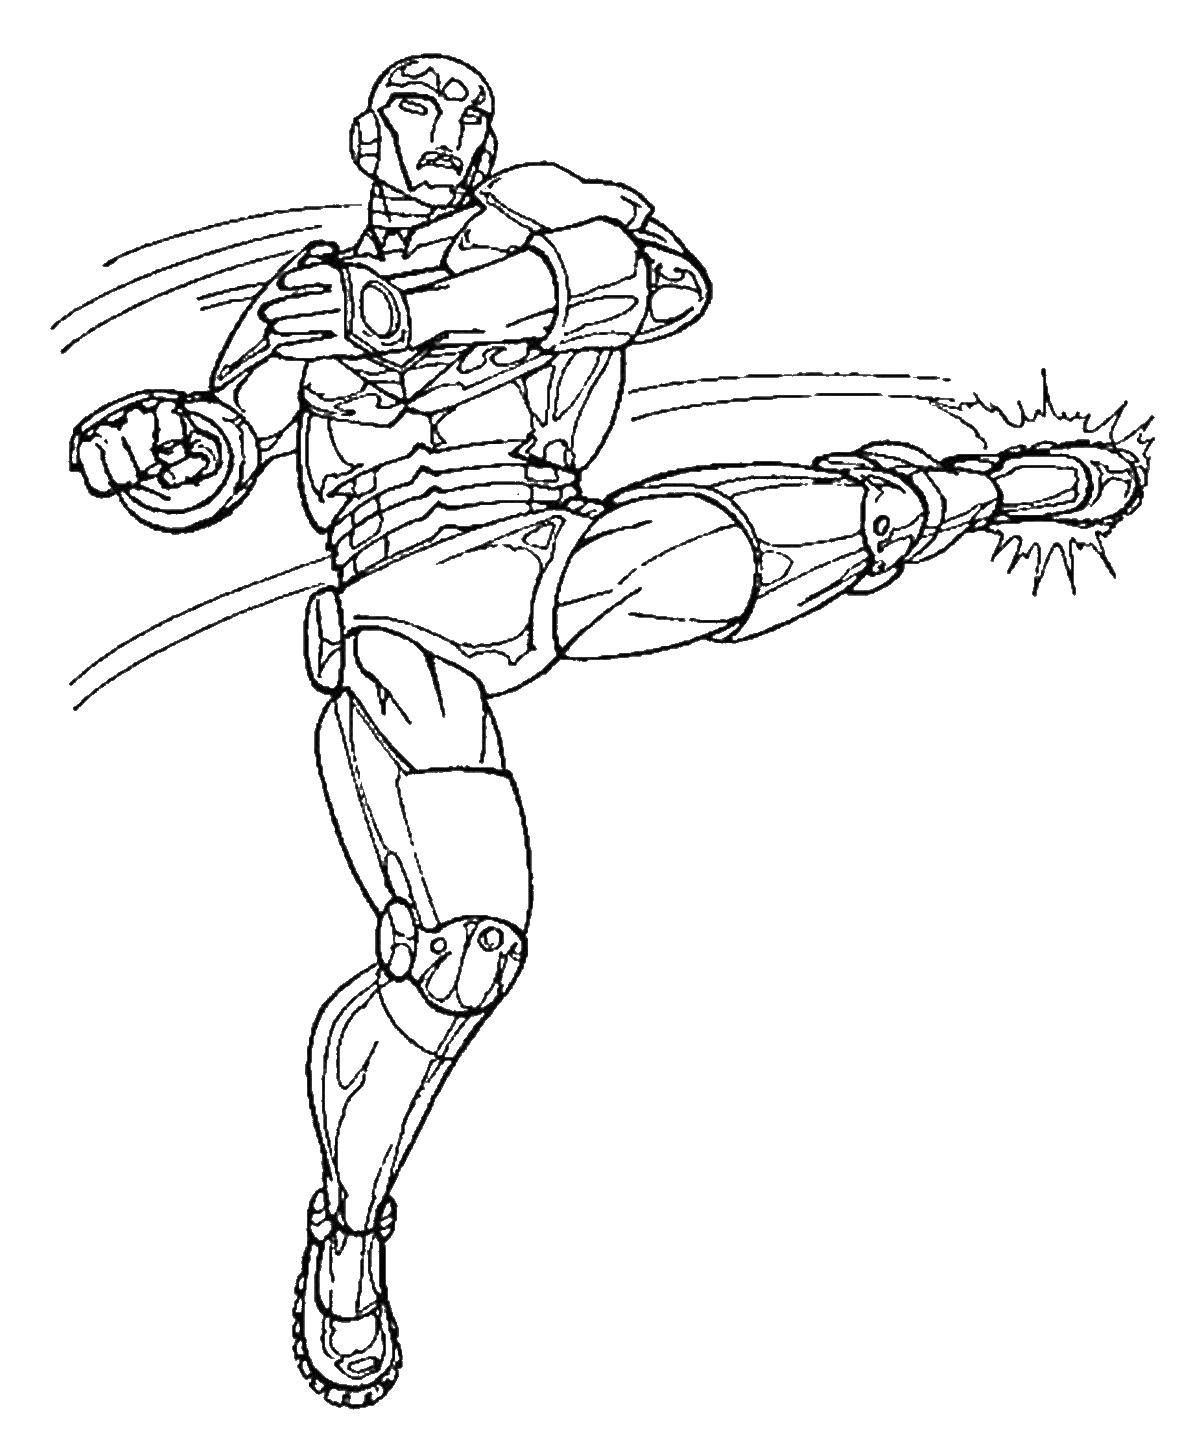 Coloring The shot of iron man. Category iron man. Tags:  Kick, iron man.